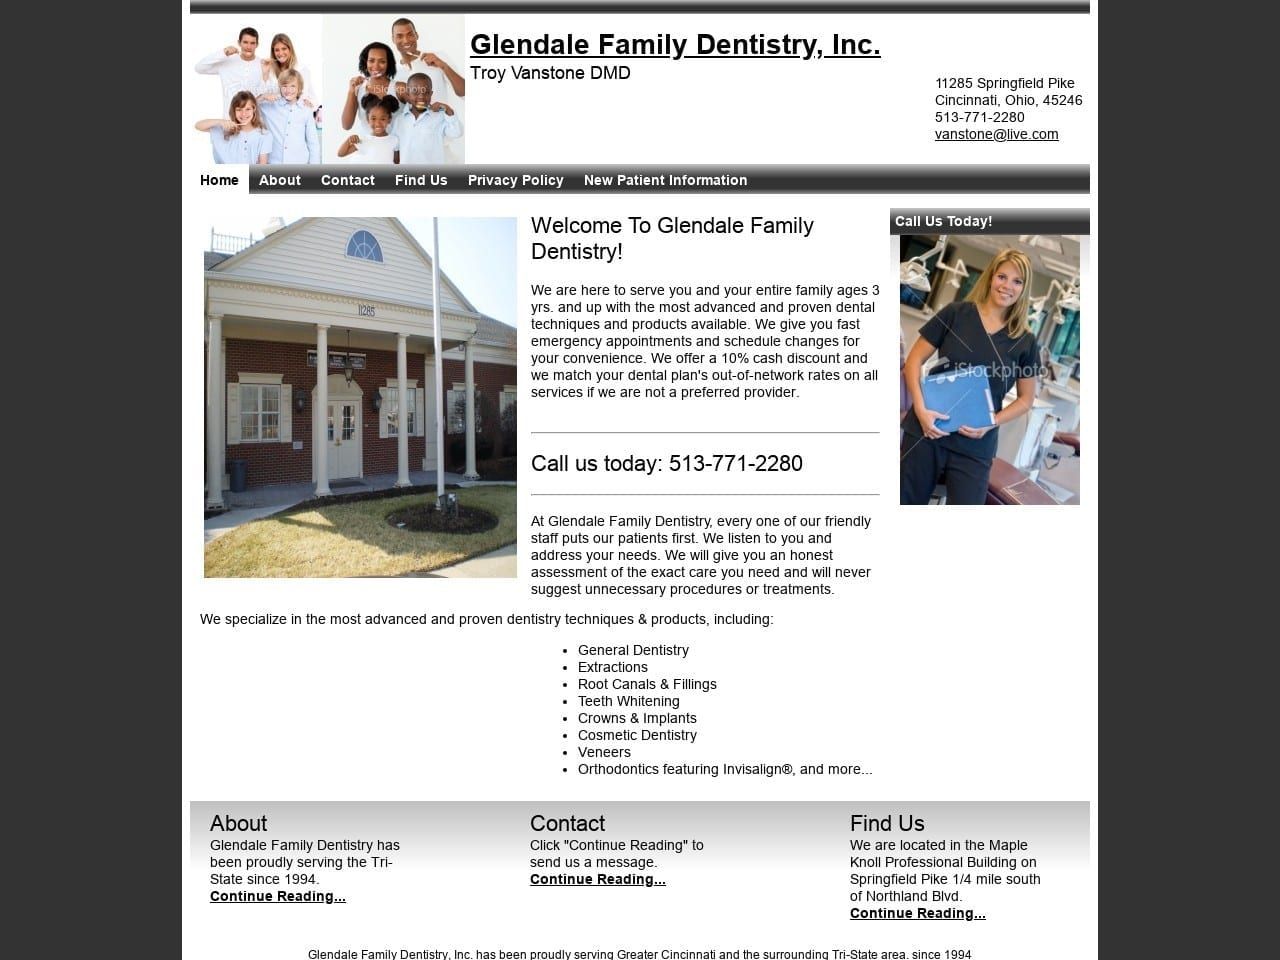 Glendale Family Dentistry Inc Vanstone Troy A DDS Website Screenshot from troyvanstonedmd.com